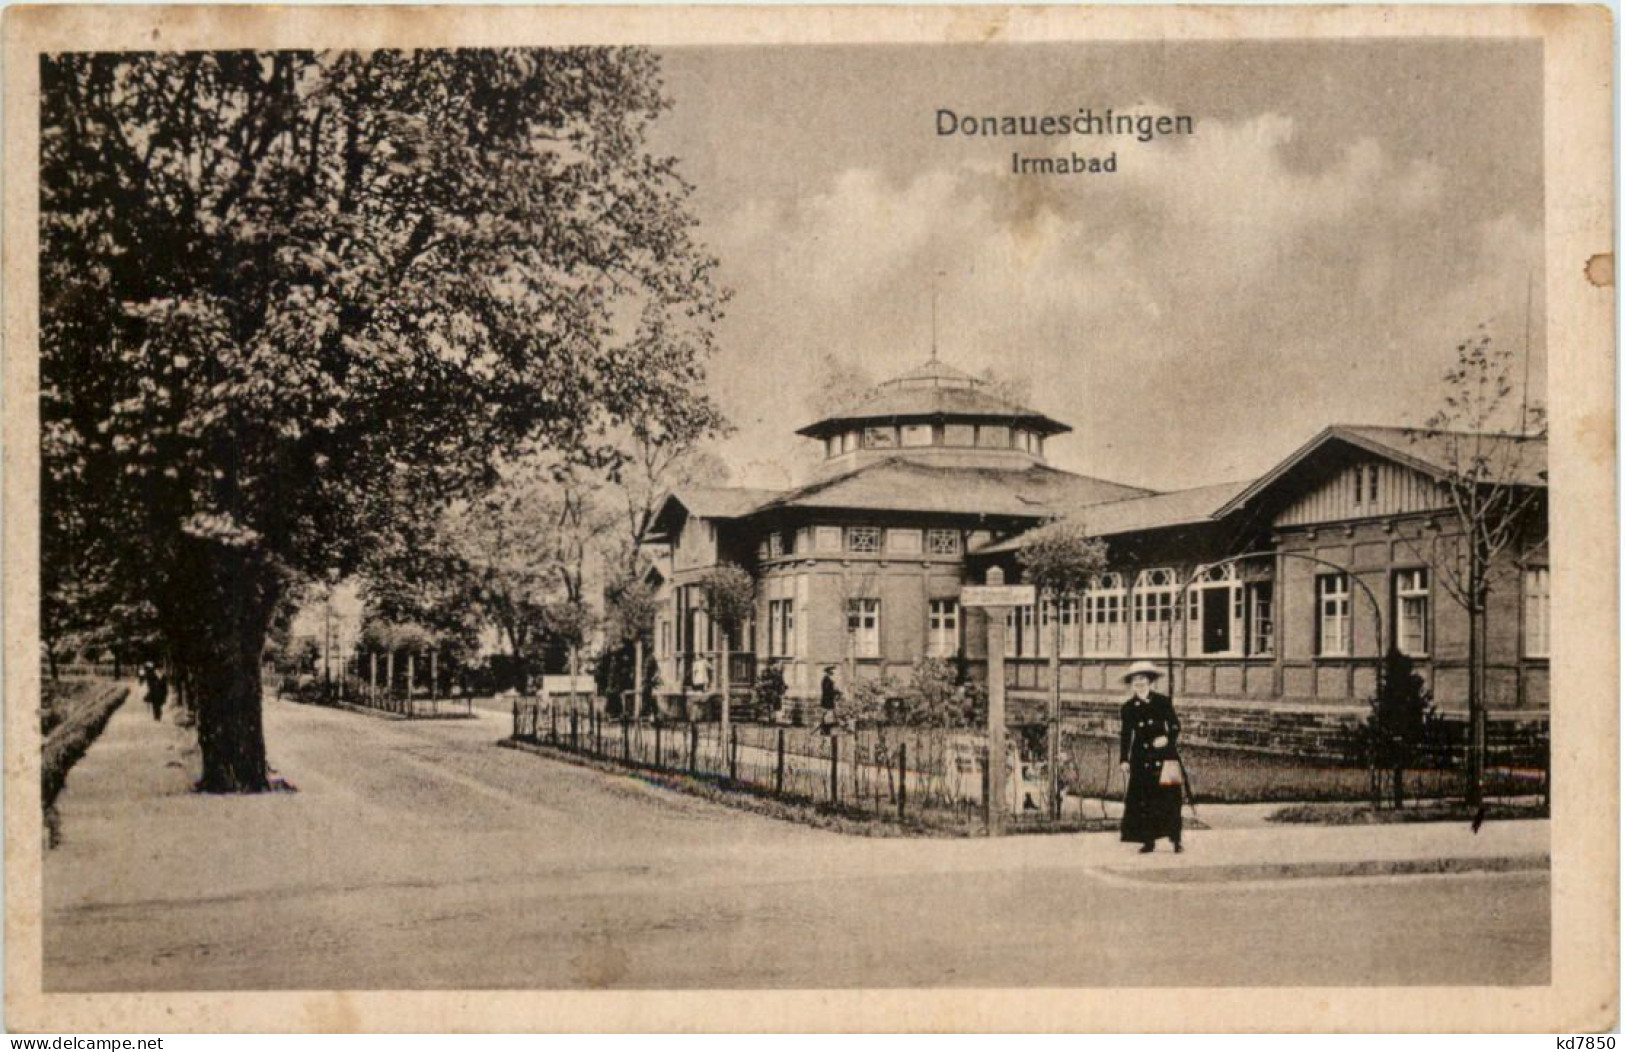 Donaueschingen, Irmabad - Donaueschingen